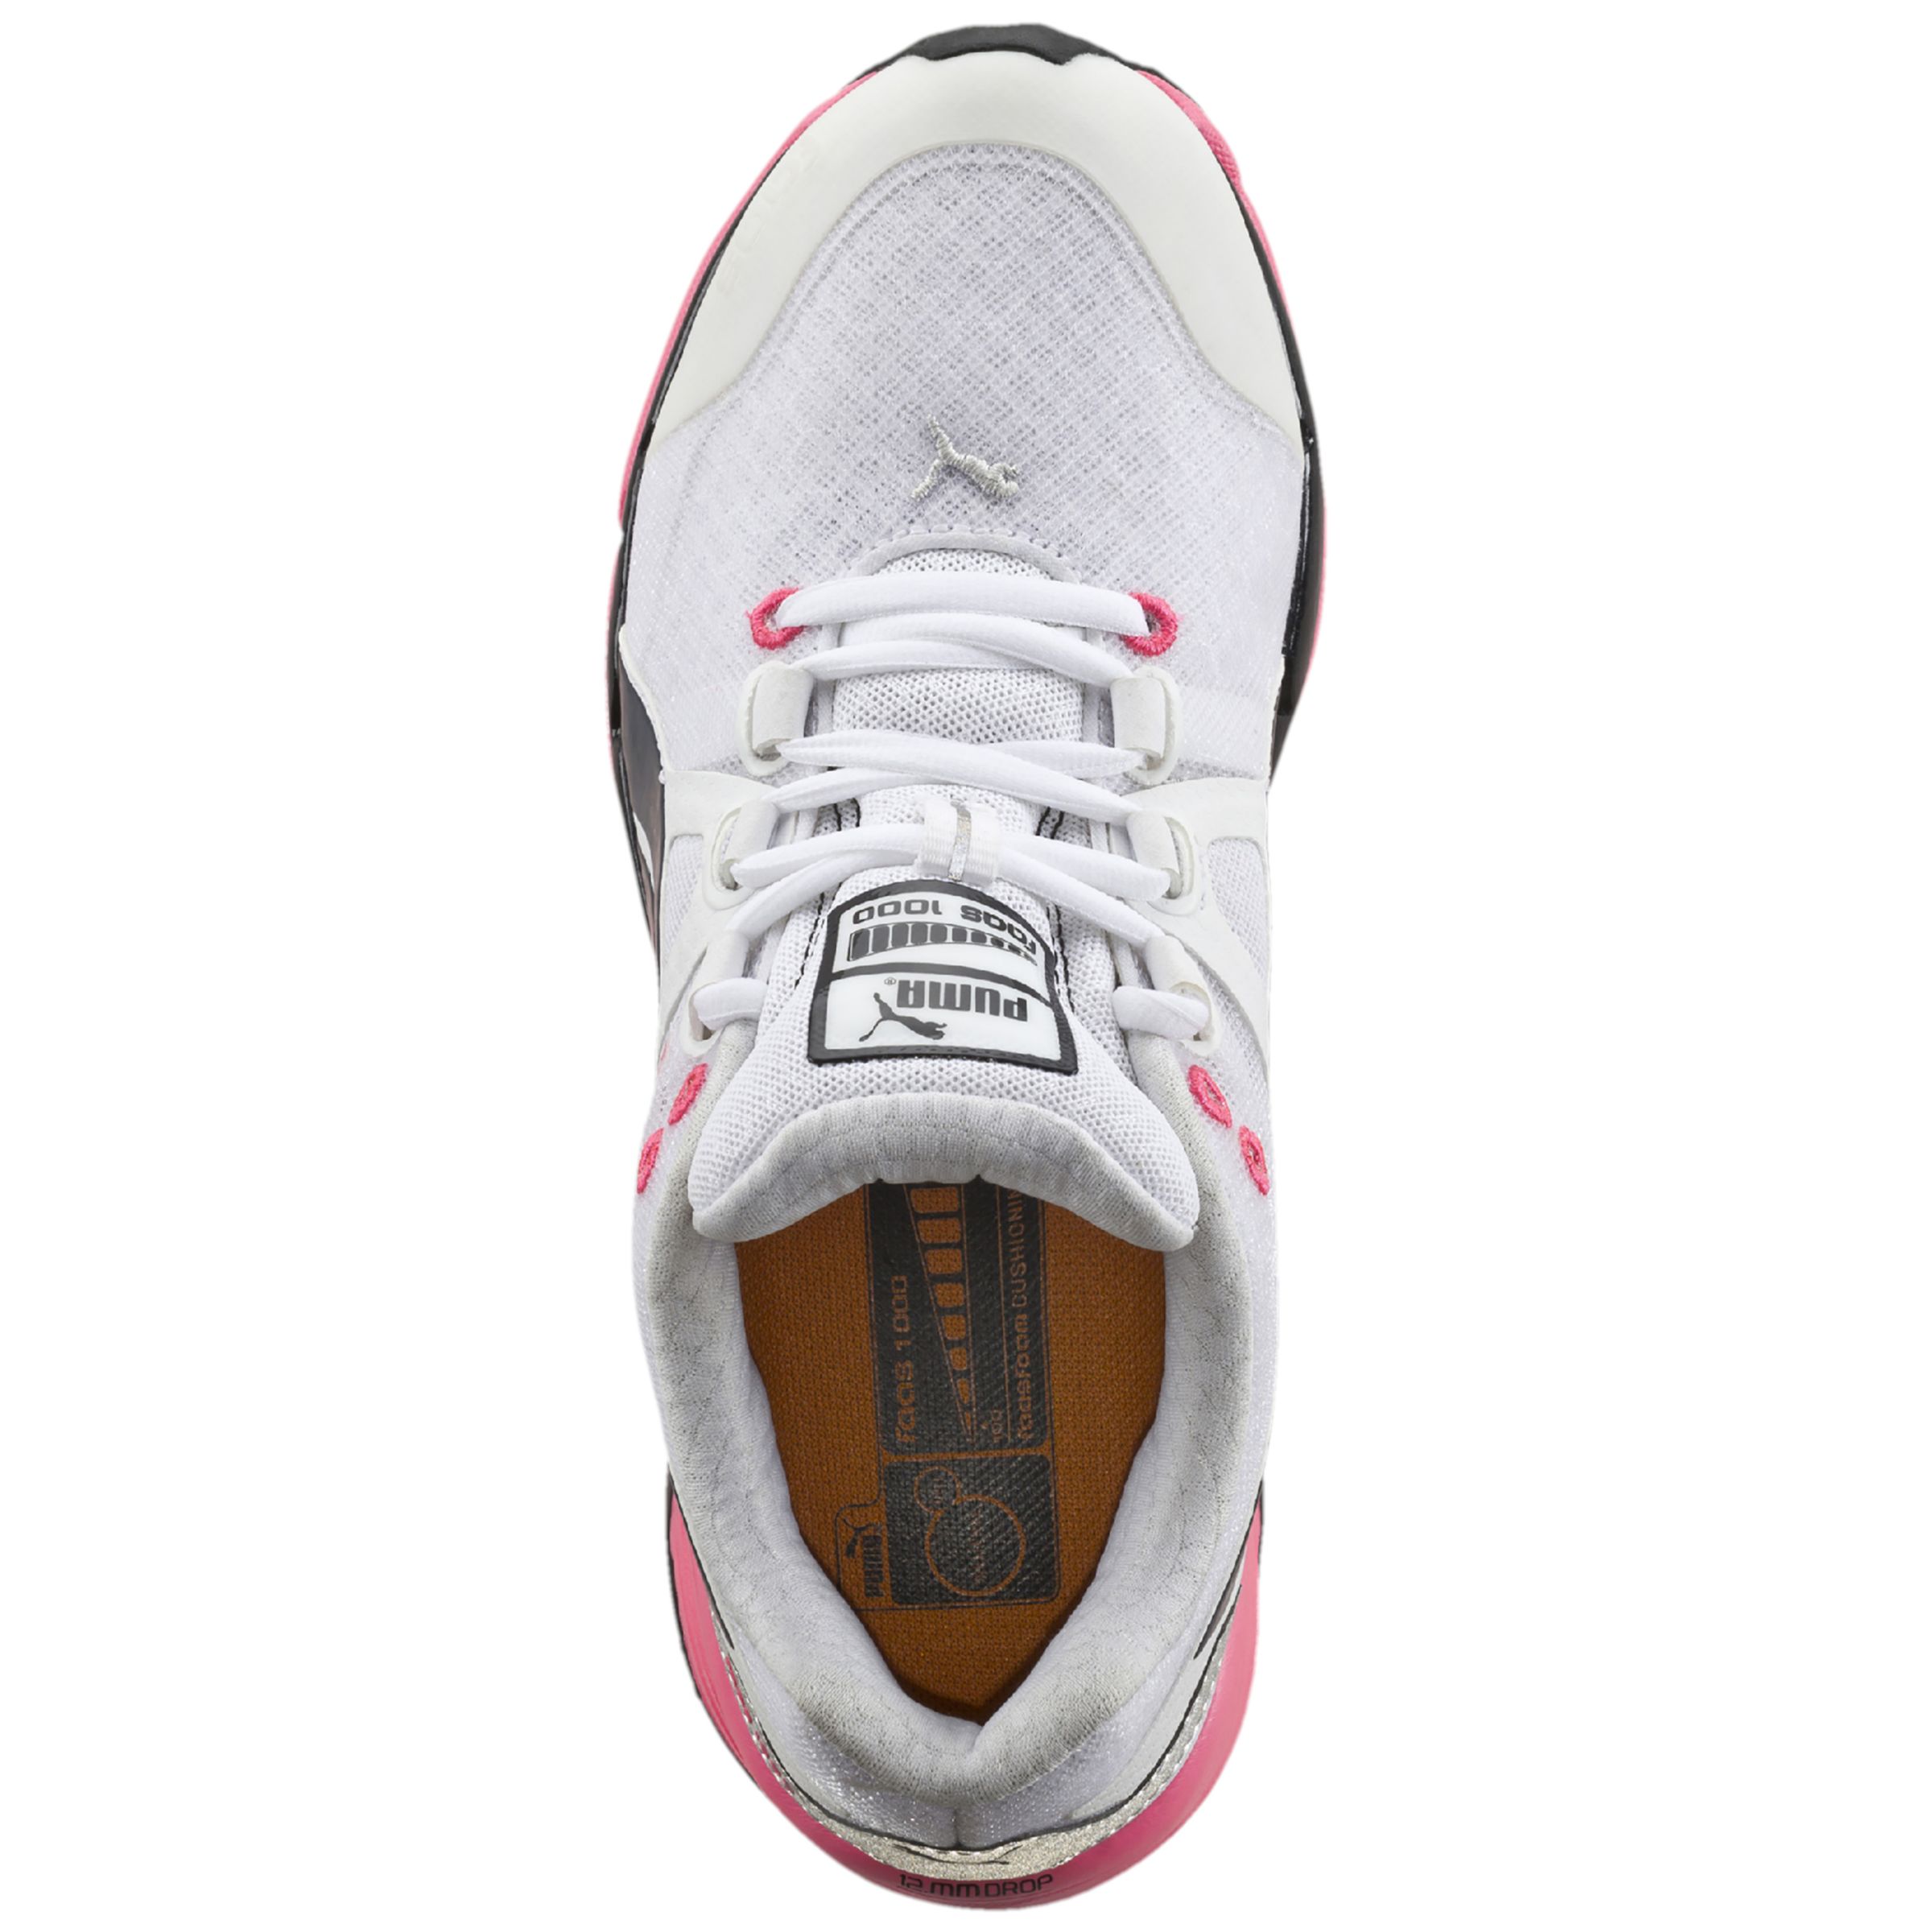 puma faas 1000 v1 5 women's running shoes